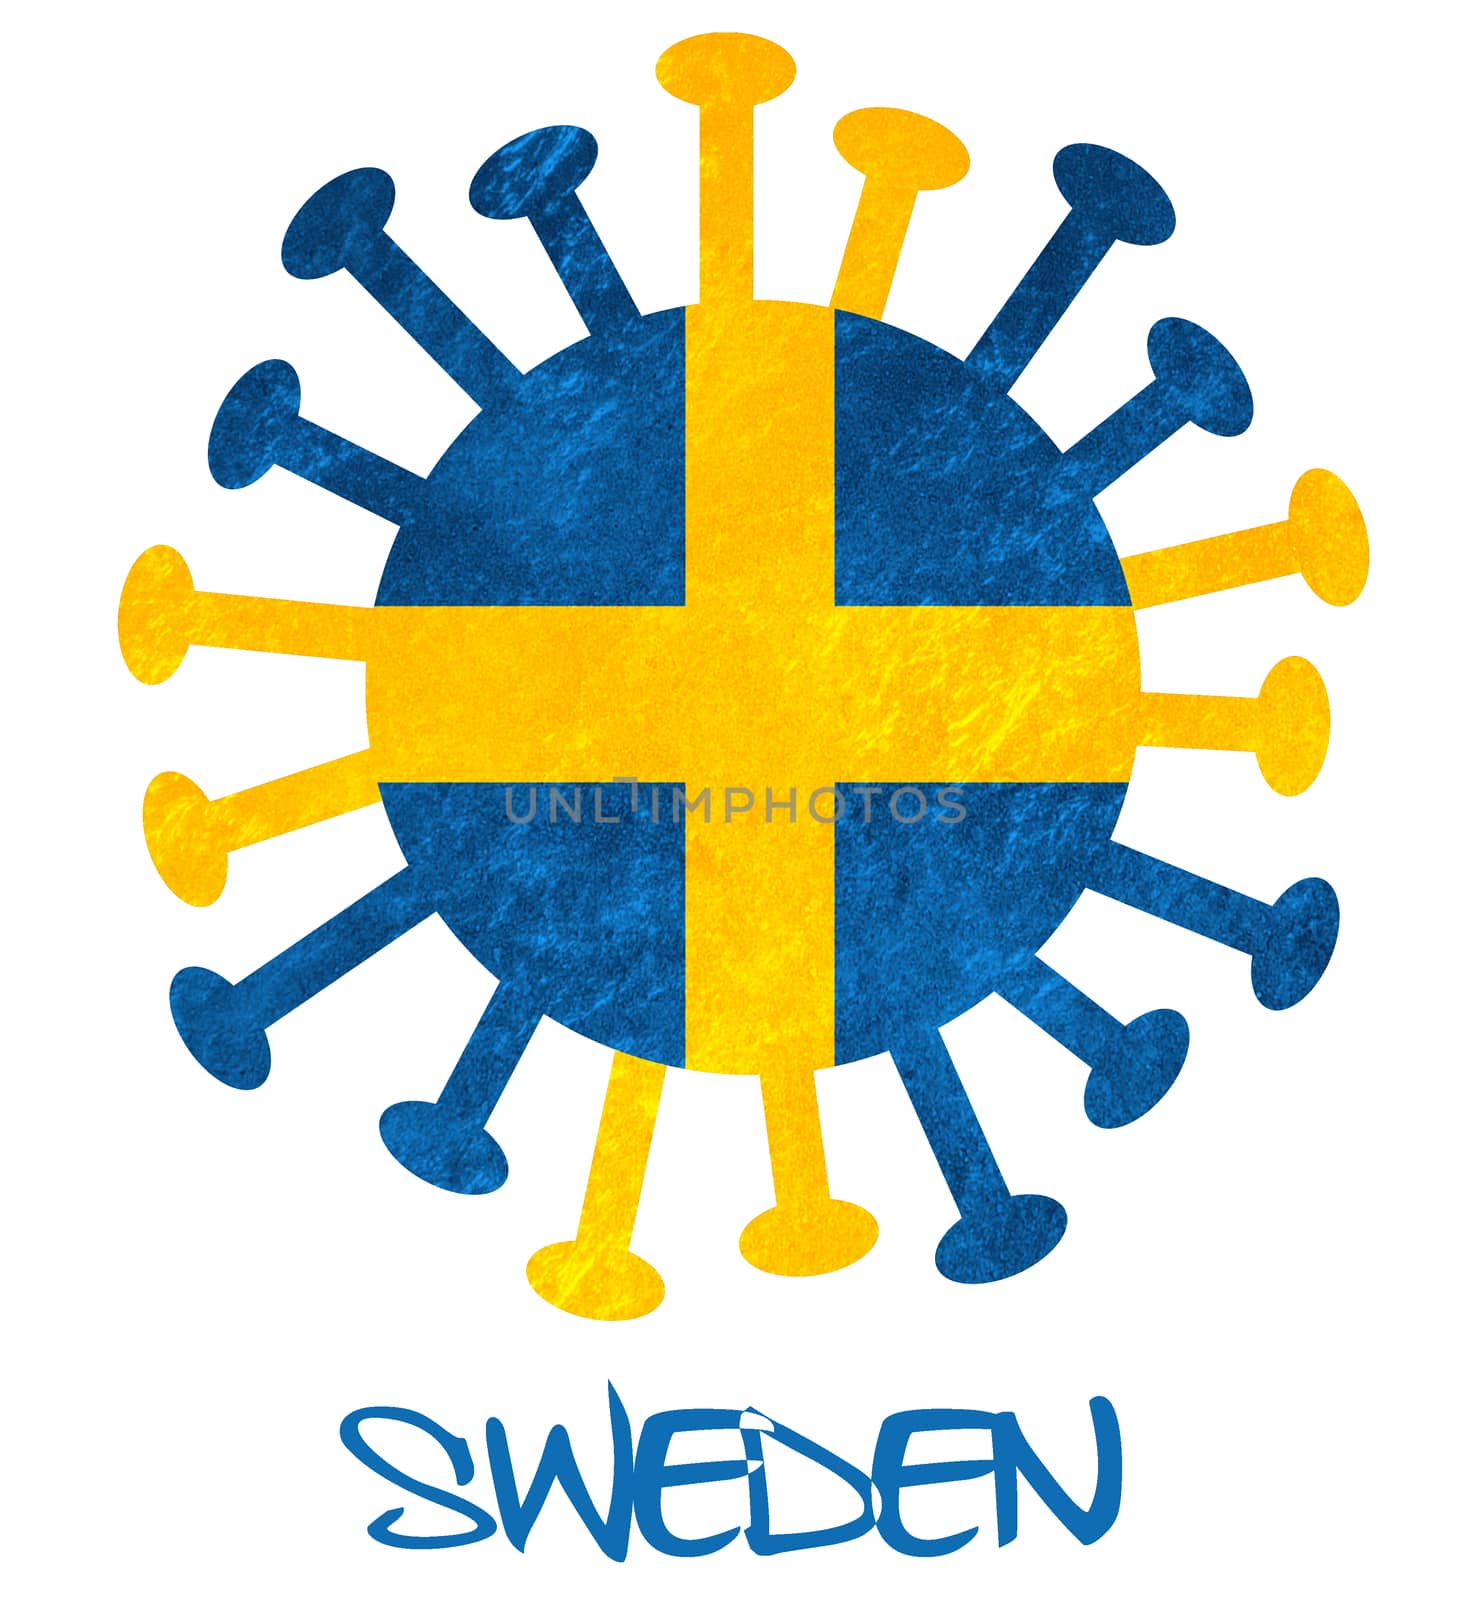 The Swedish national flag with corona virus or bacteria - Isolated on white